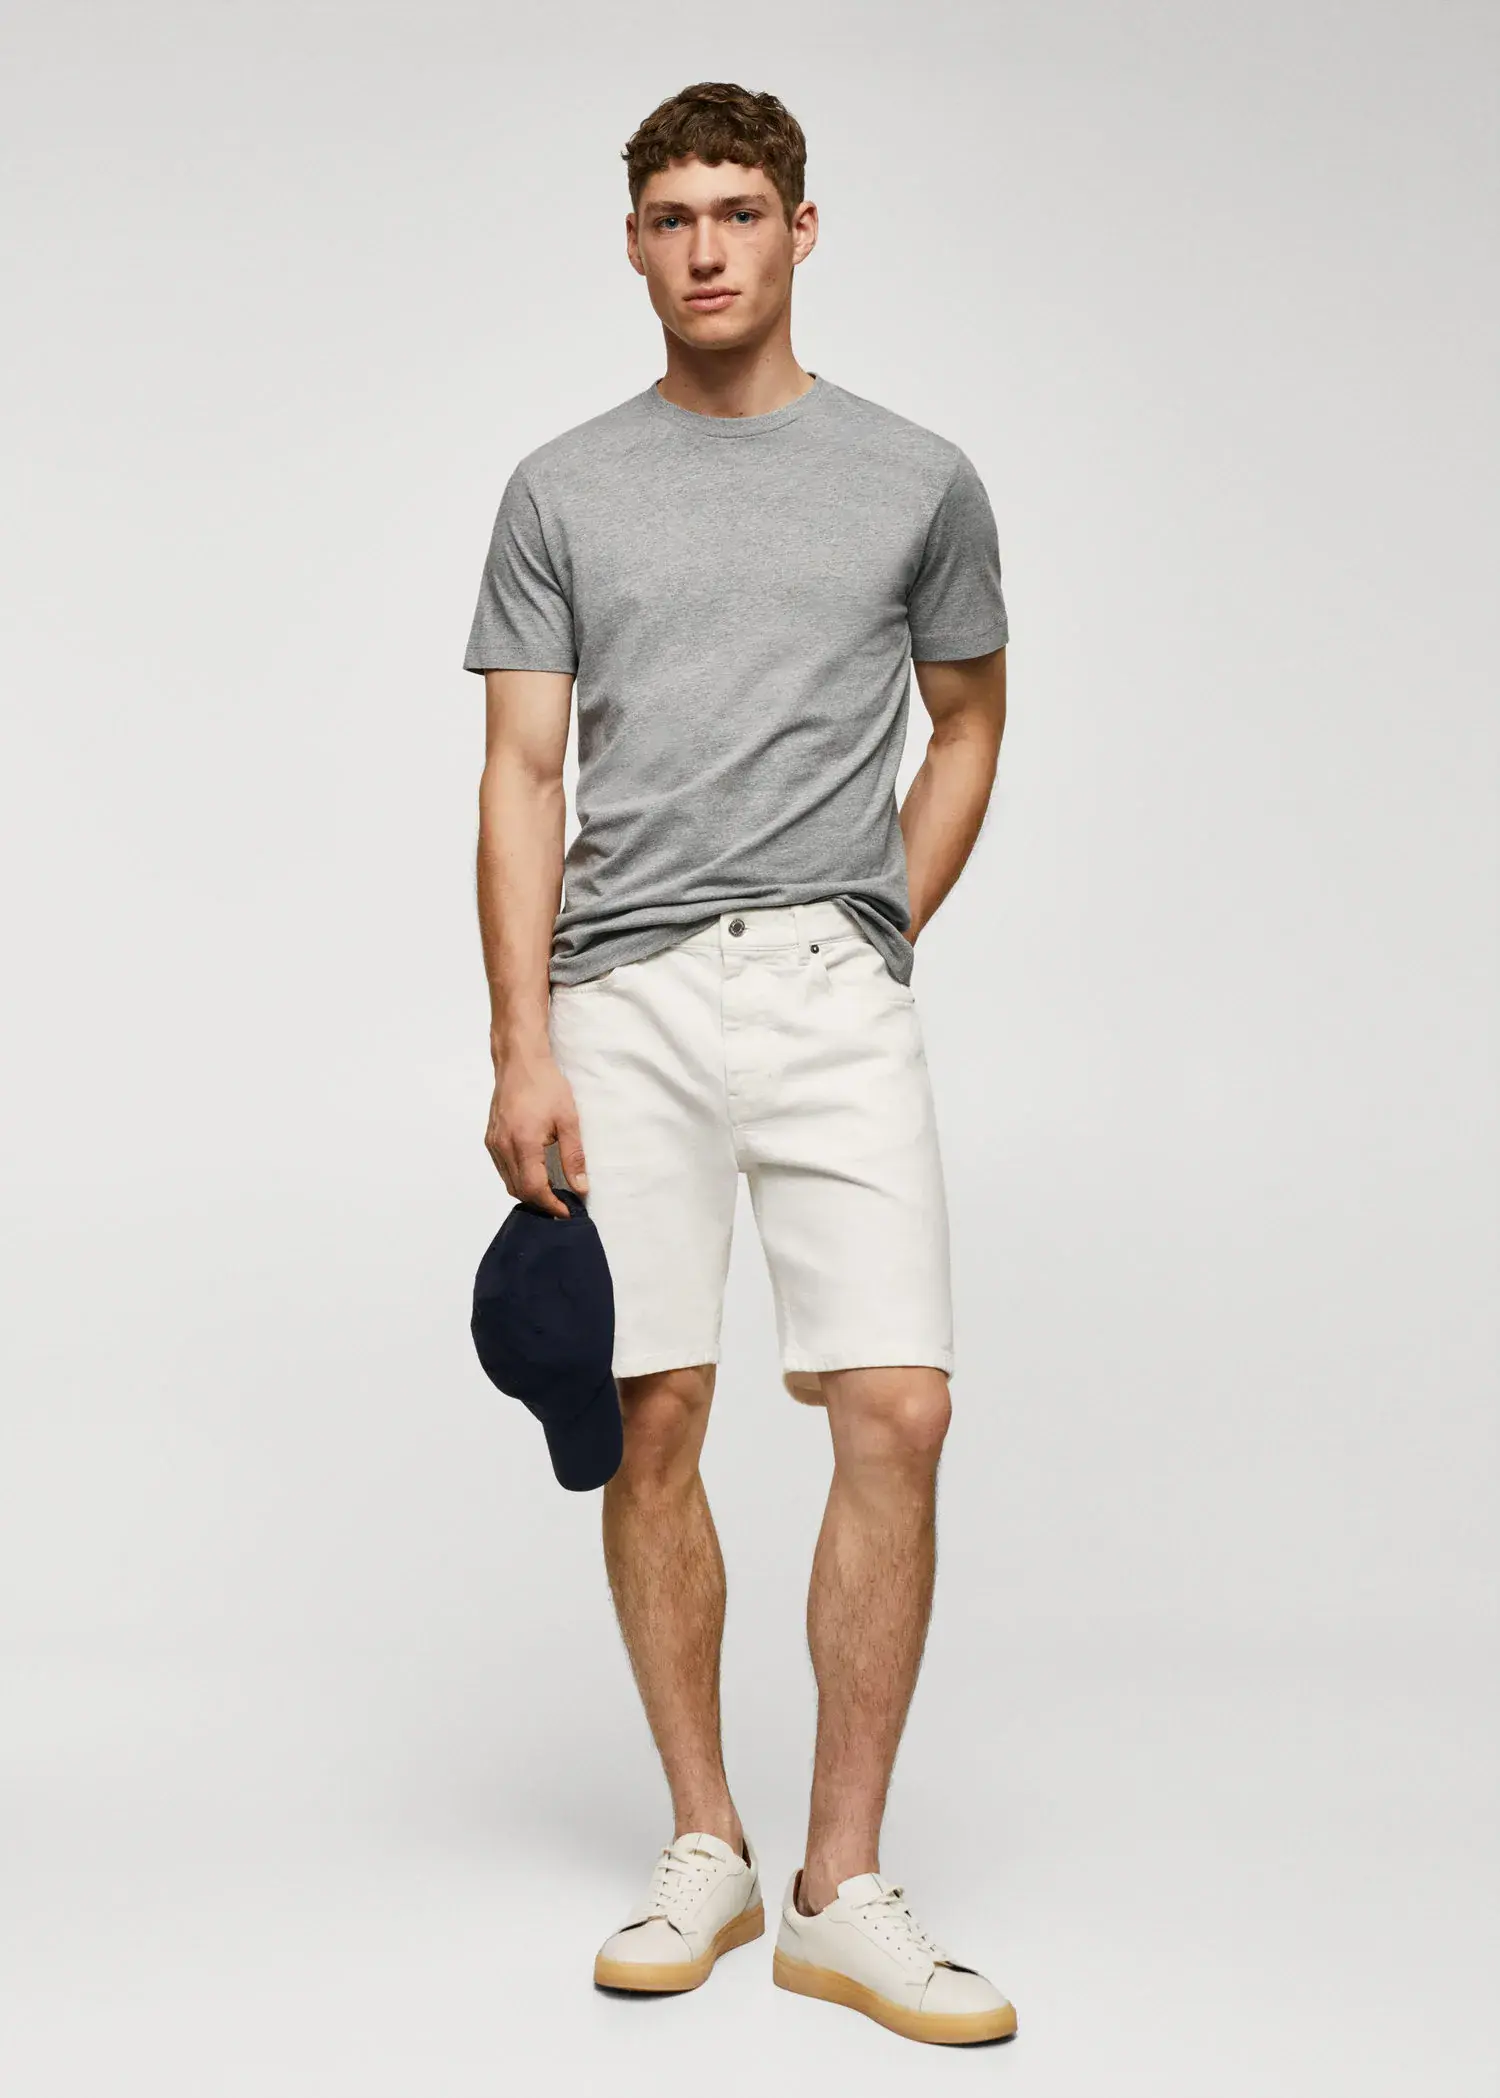 Mango Basic cotton stretch T-shirt. a young man wearing white shorts and a gray t-shirt. 